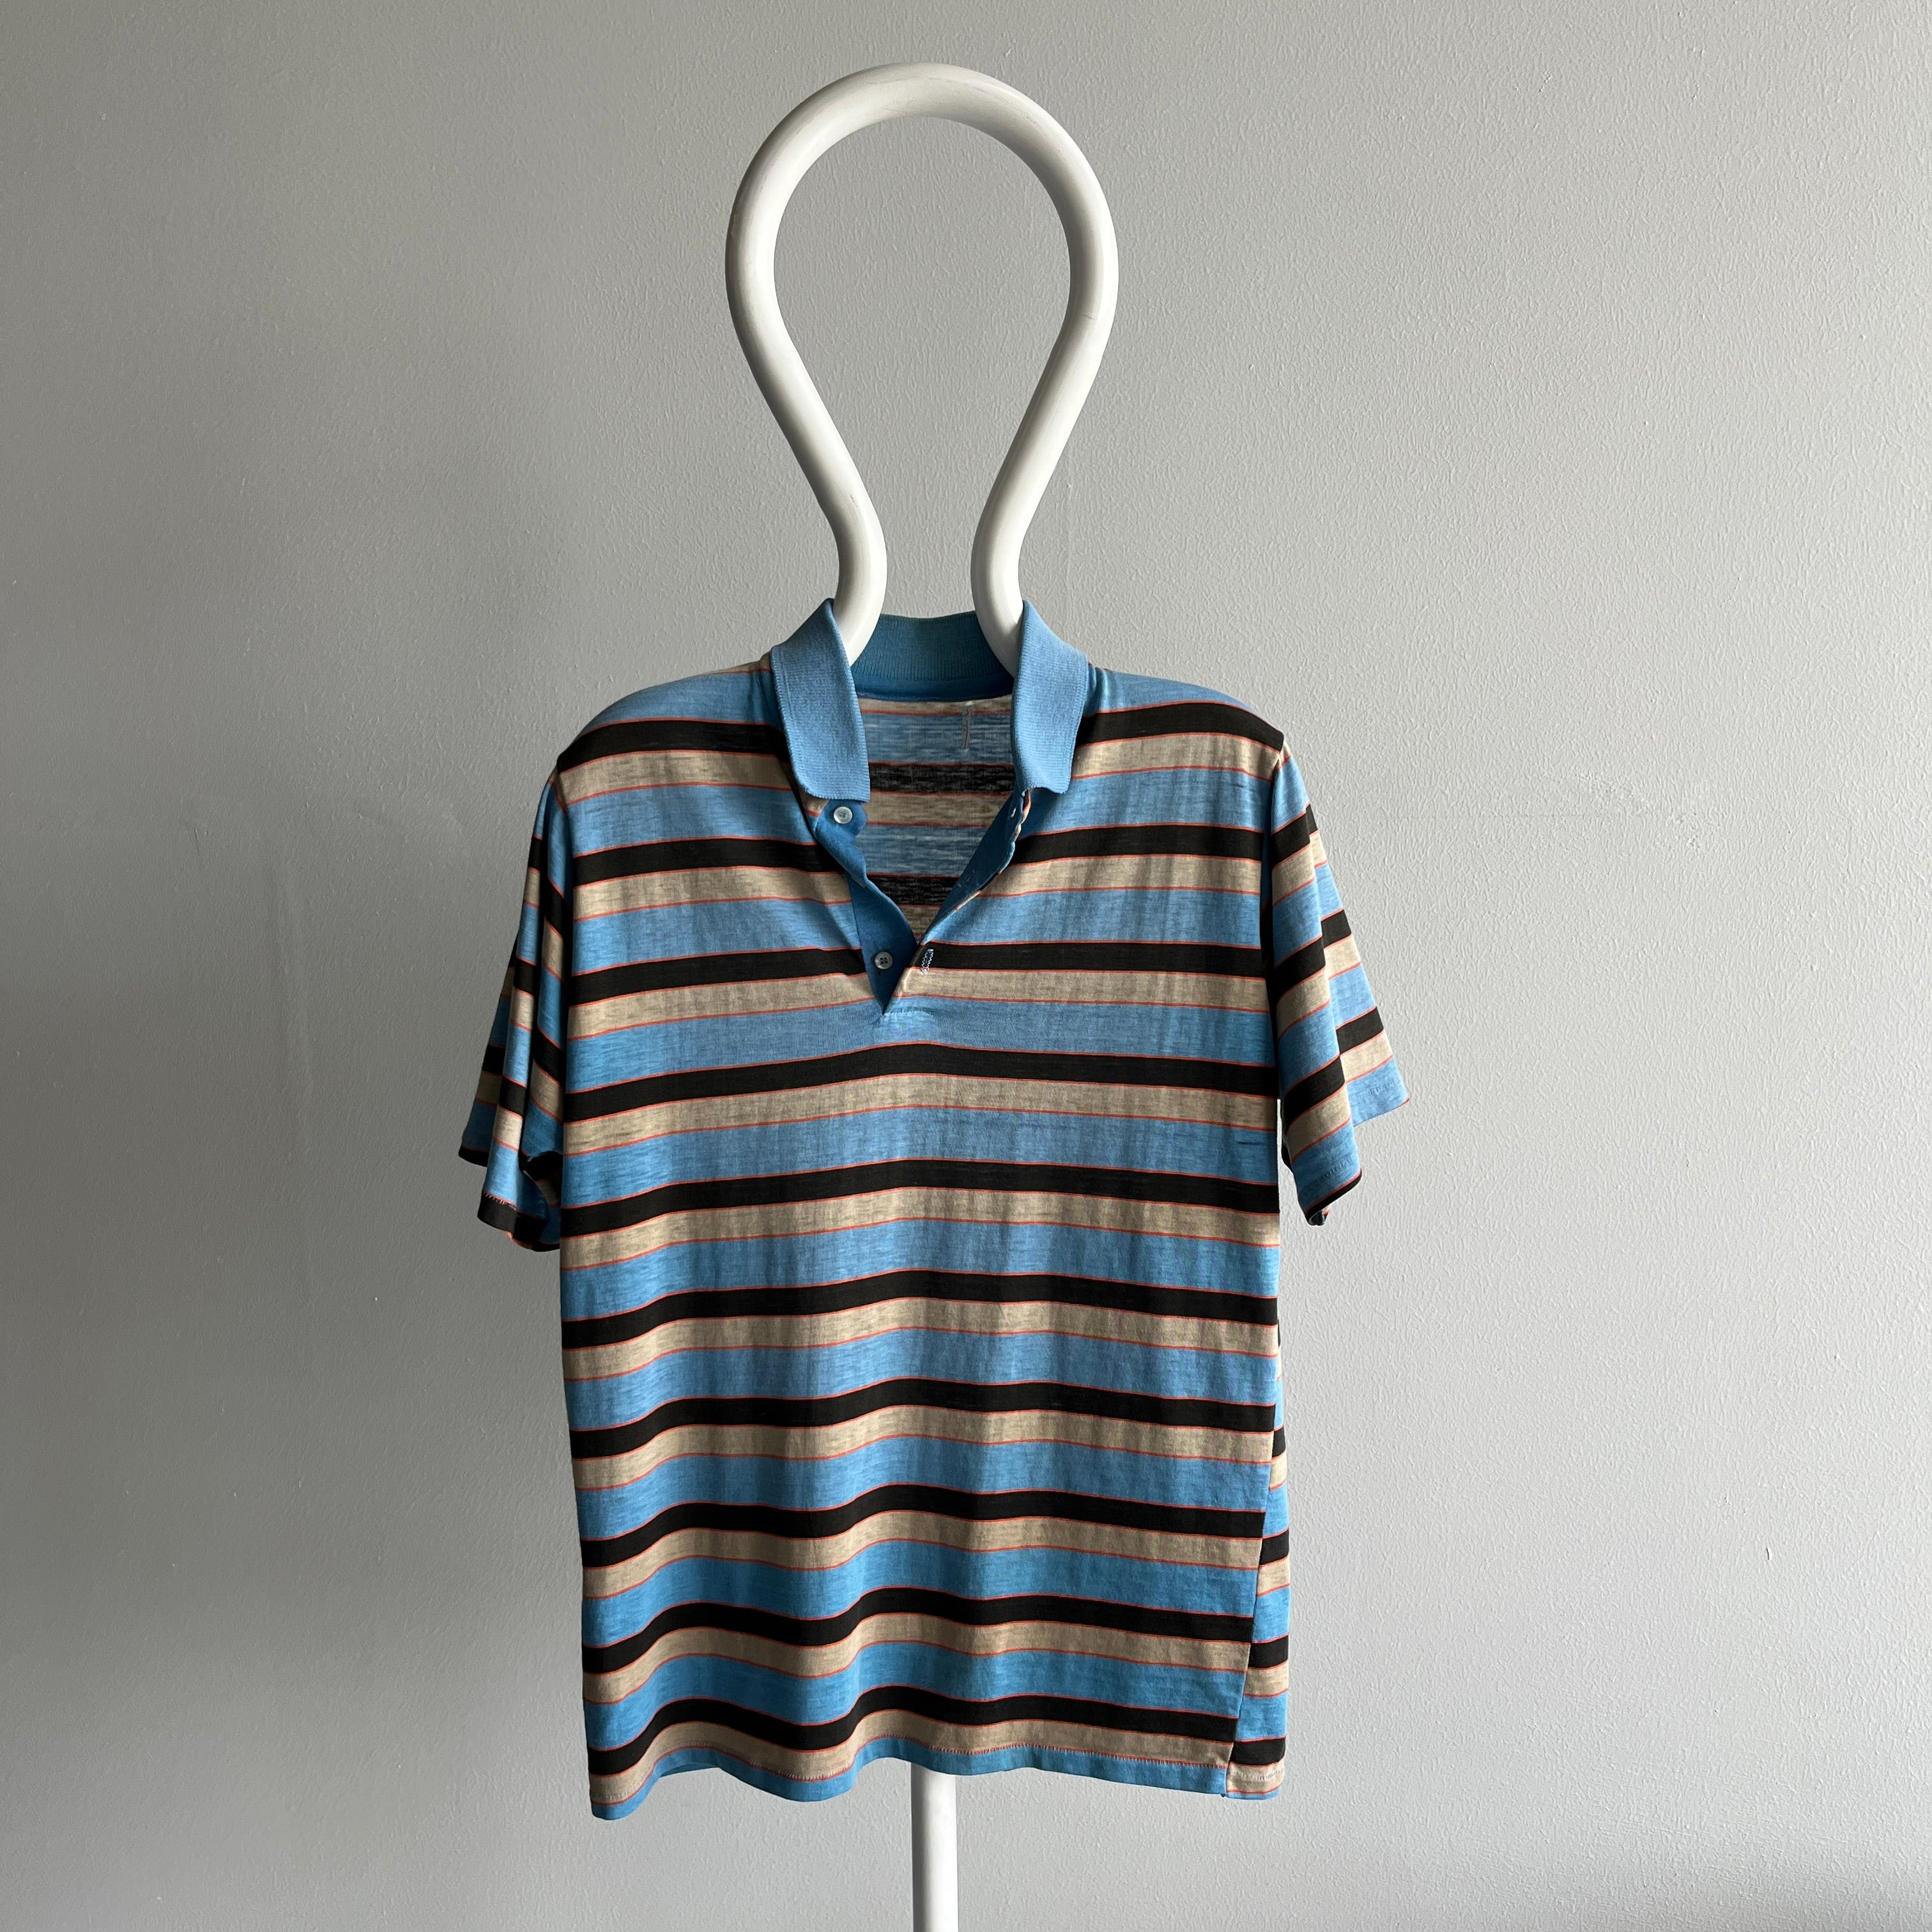 1970/80s Striped Polo Shirt